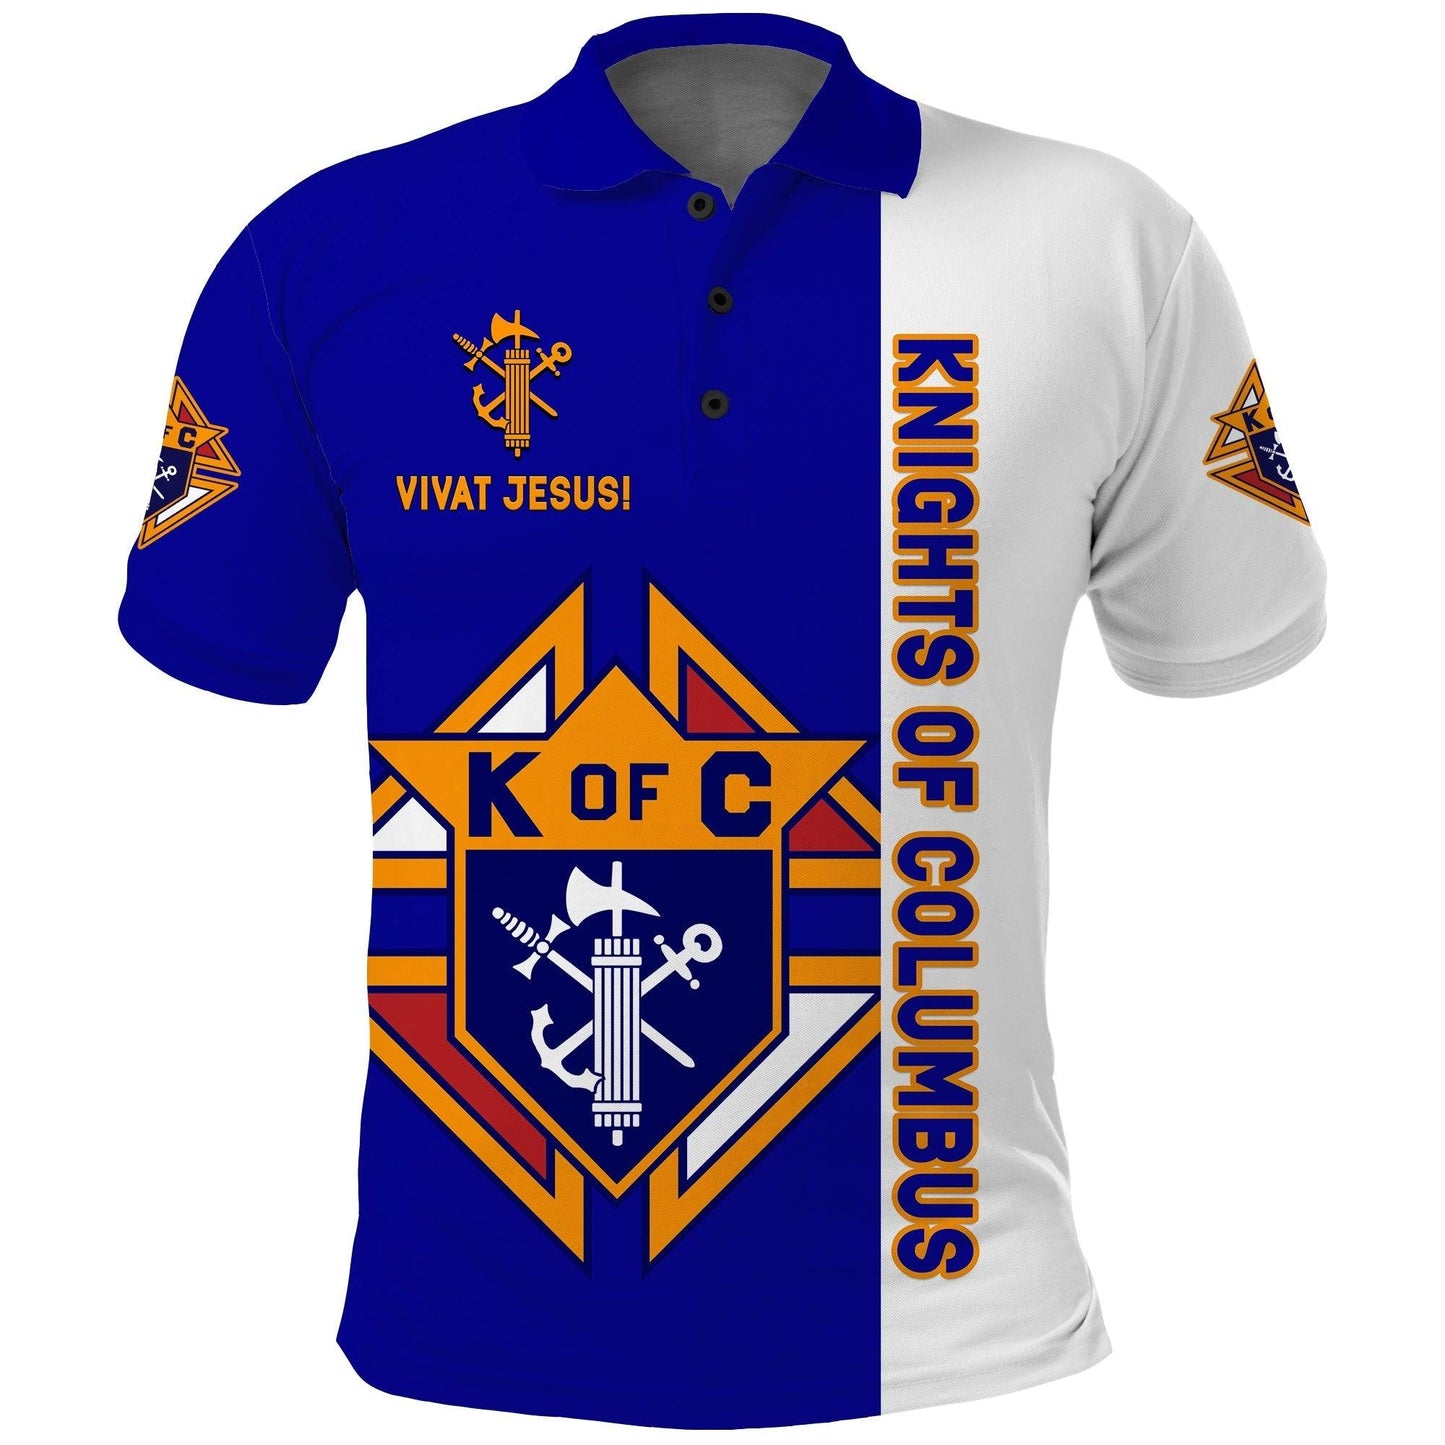 Simonandcool (Custom Personalised) Knights of Columbus Polo Shirt Half Style LT13